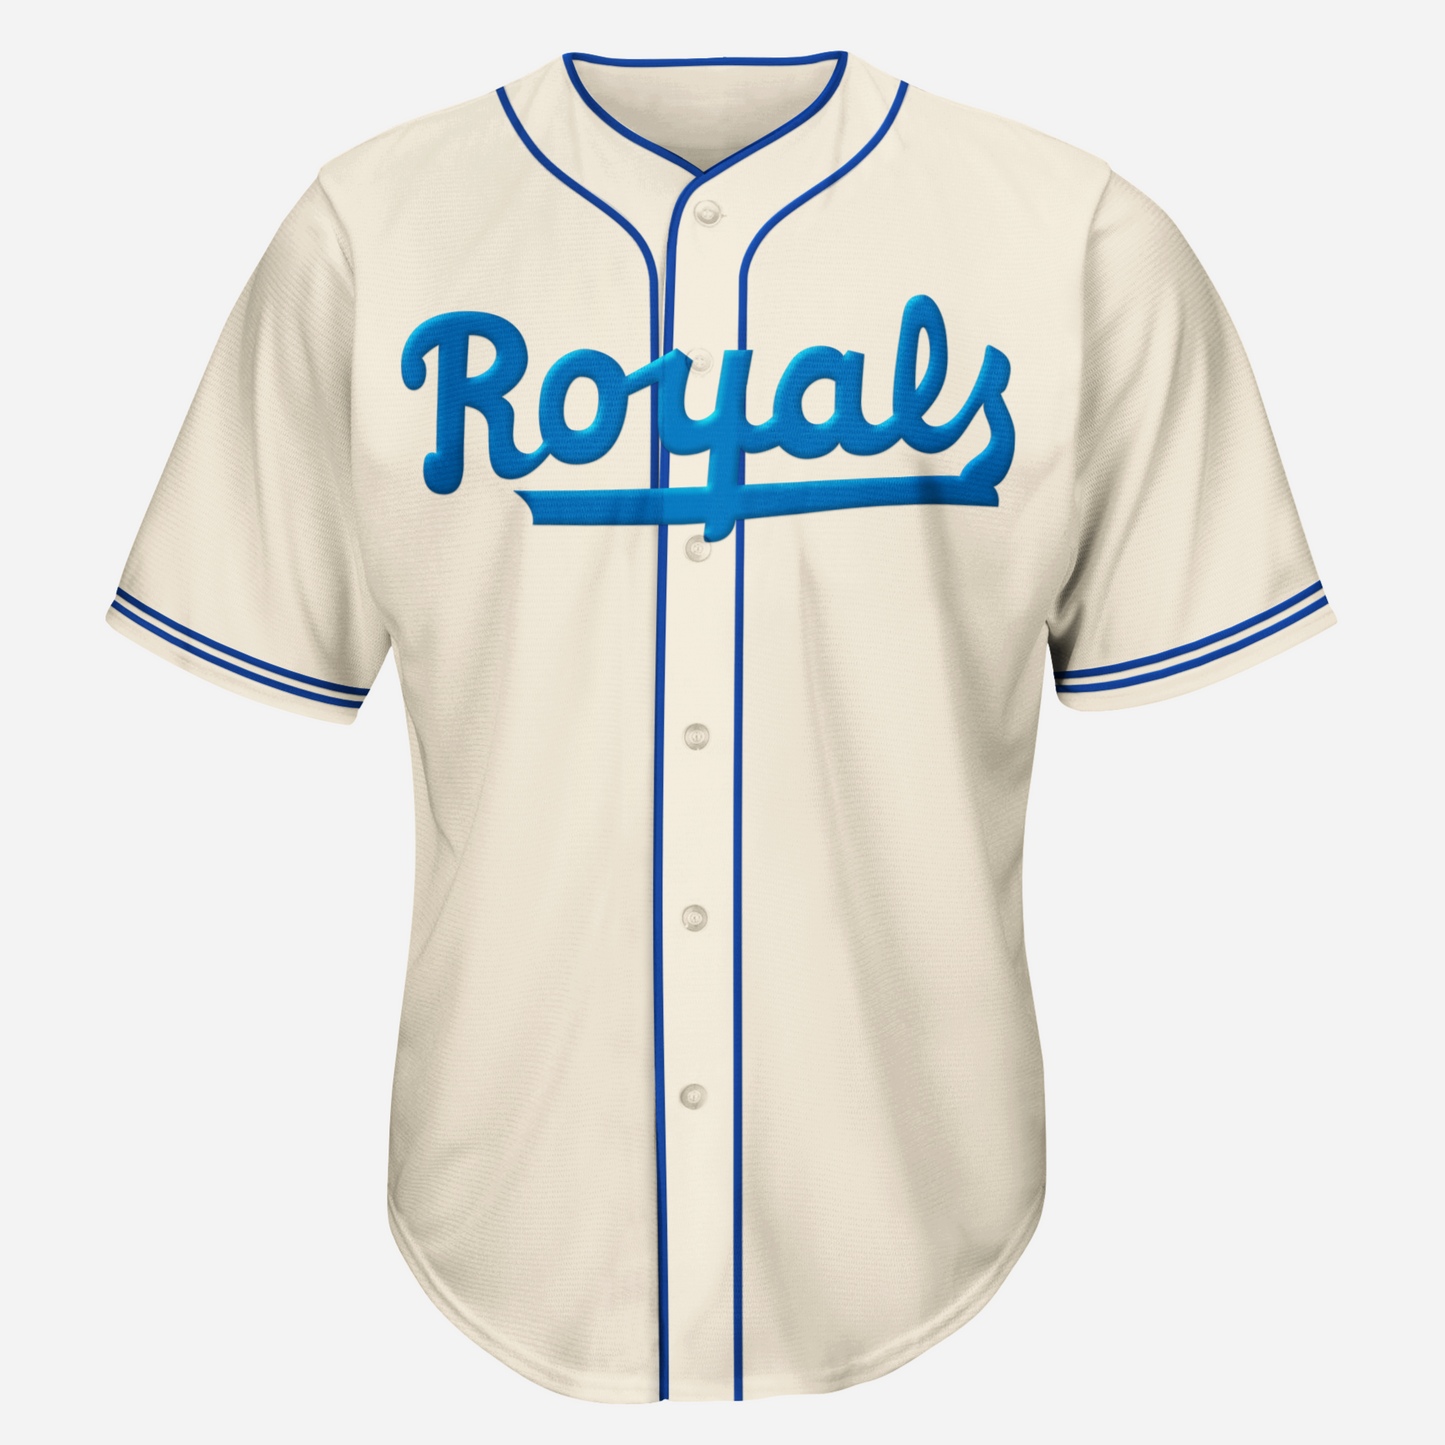 Official Kansas City Royals Gear, Royals Jerseys, Store, Royals Gifts,  Apparel